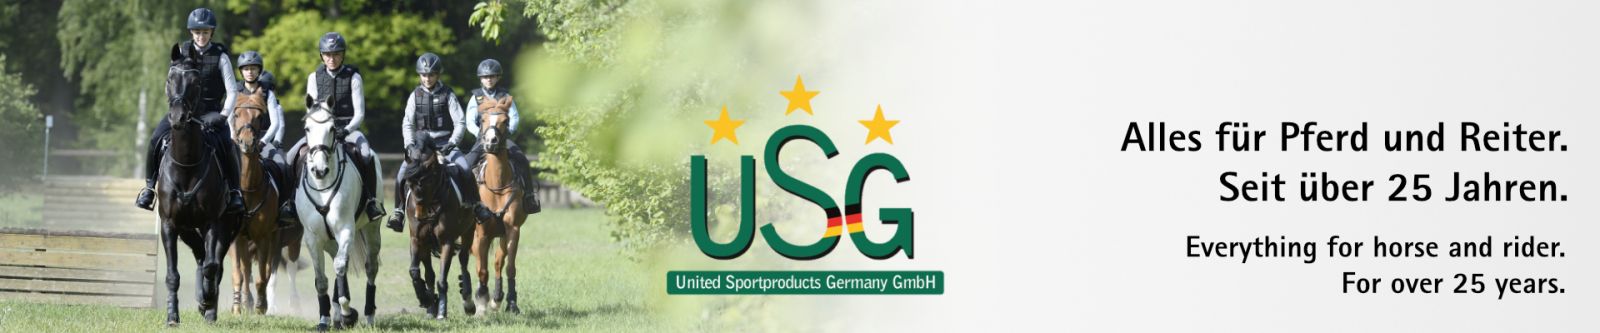 Impressum - USG - United Sportproducts Germany GmbH